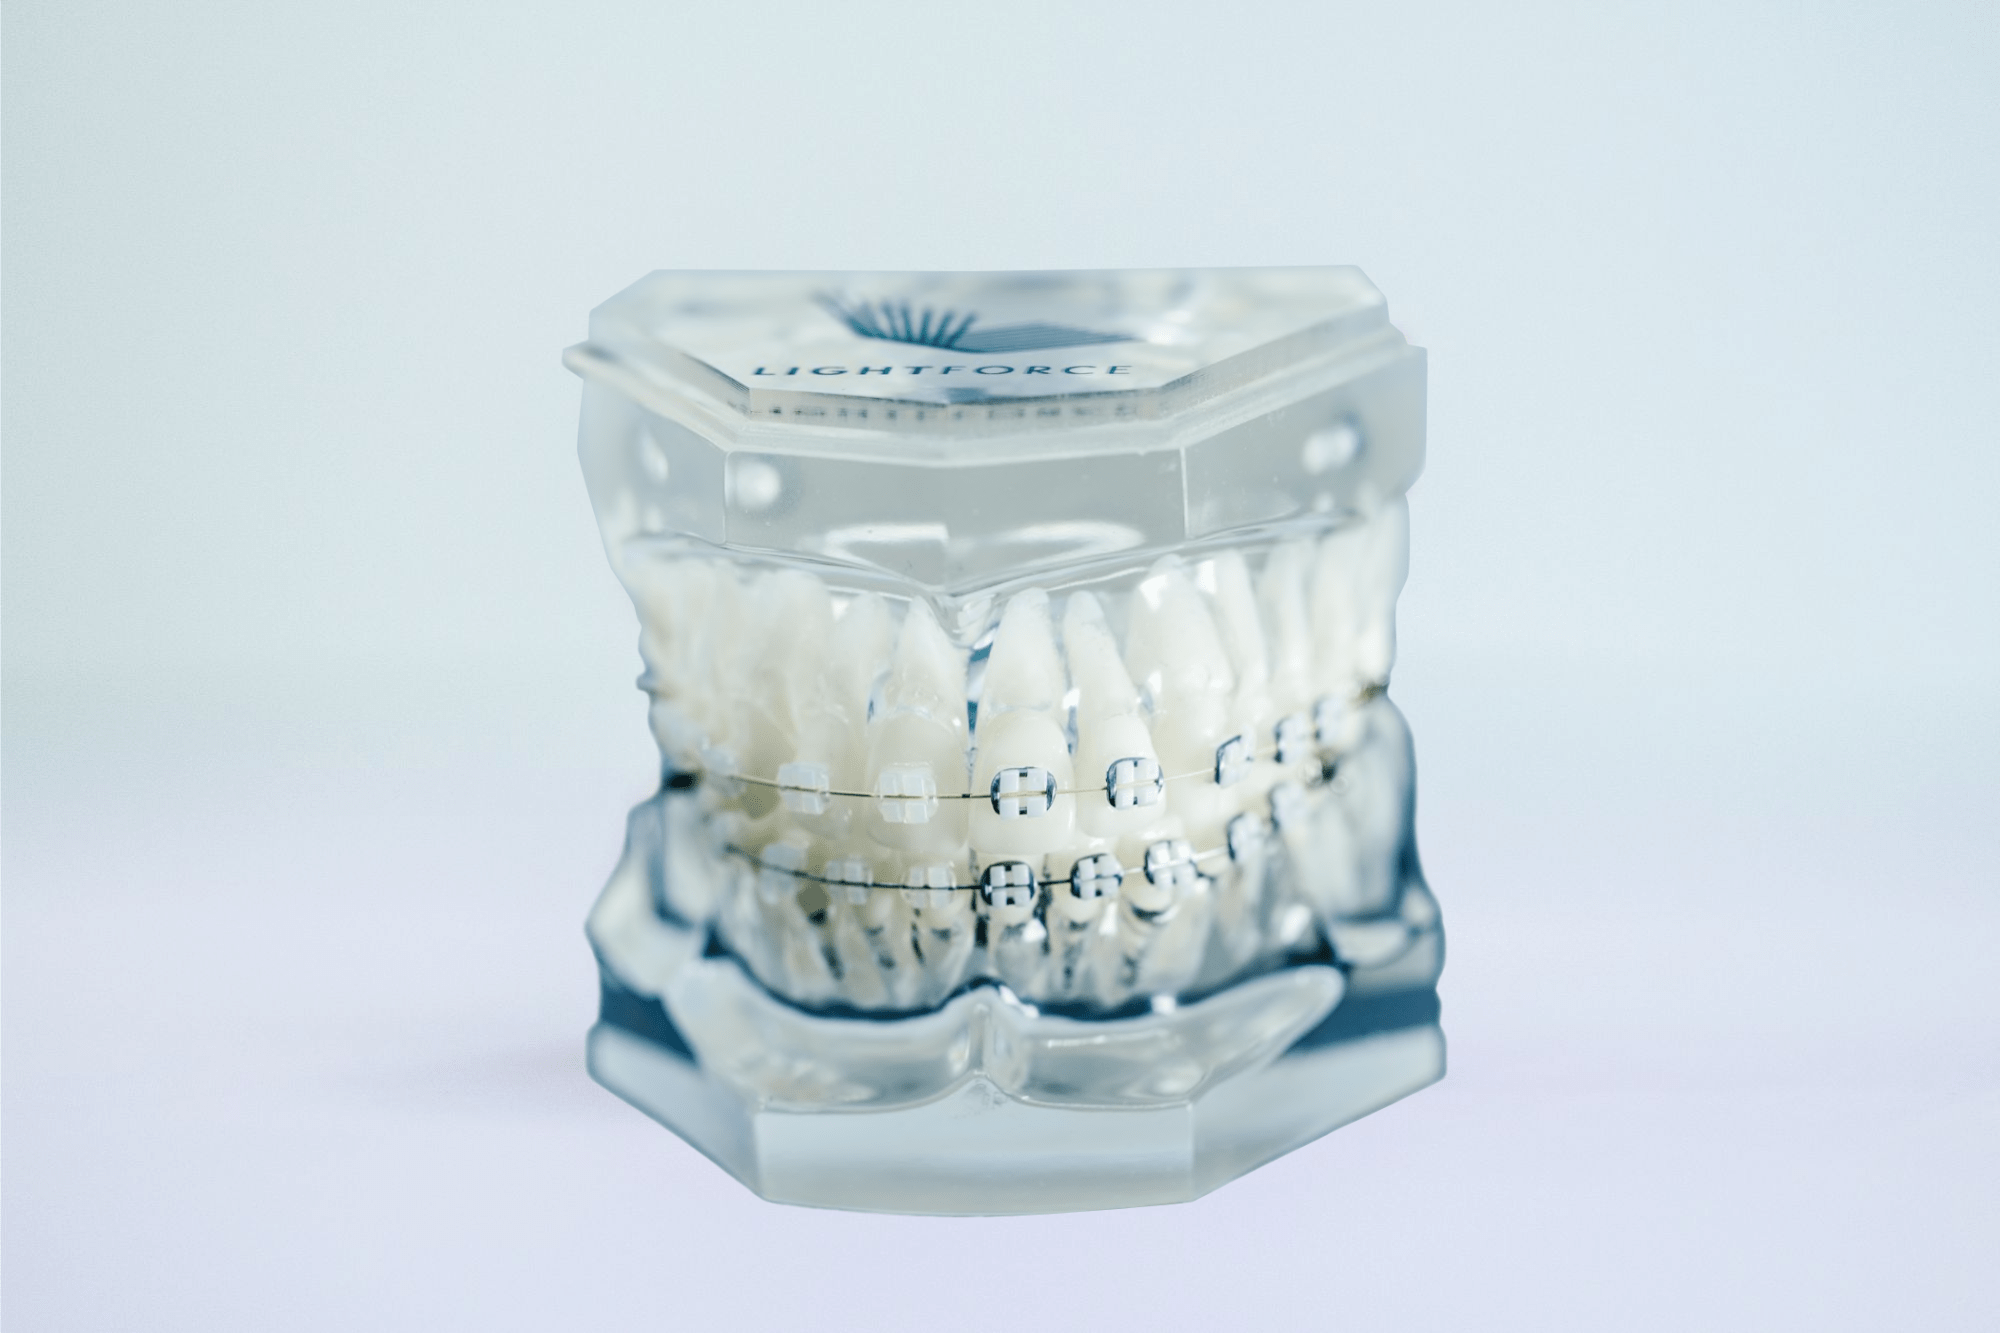 lightforce clear braces on plastic model